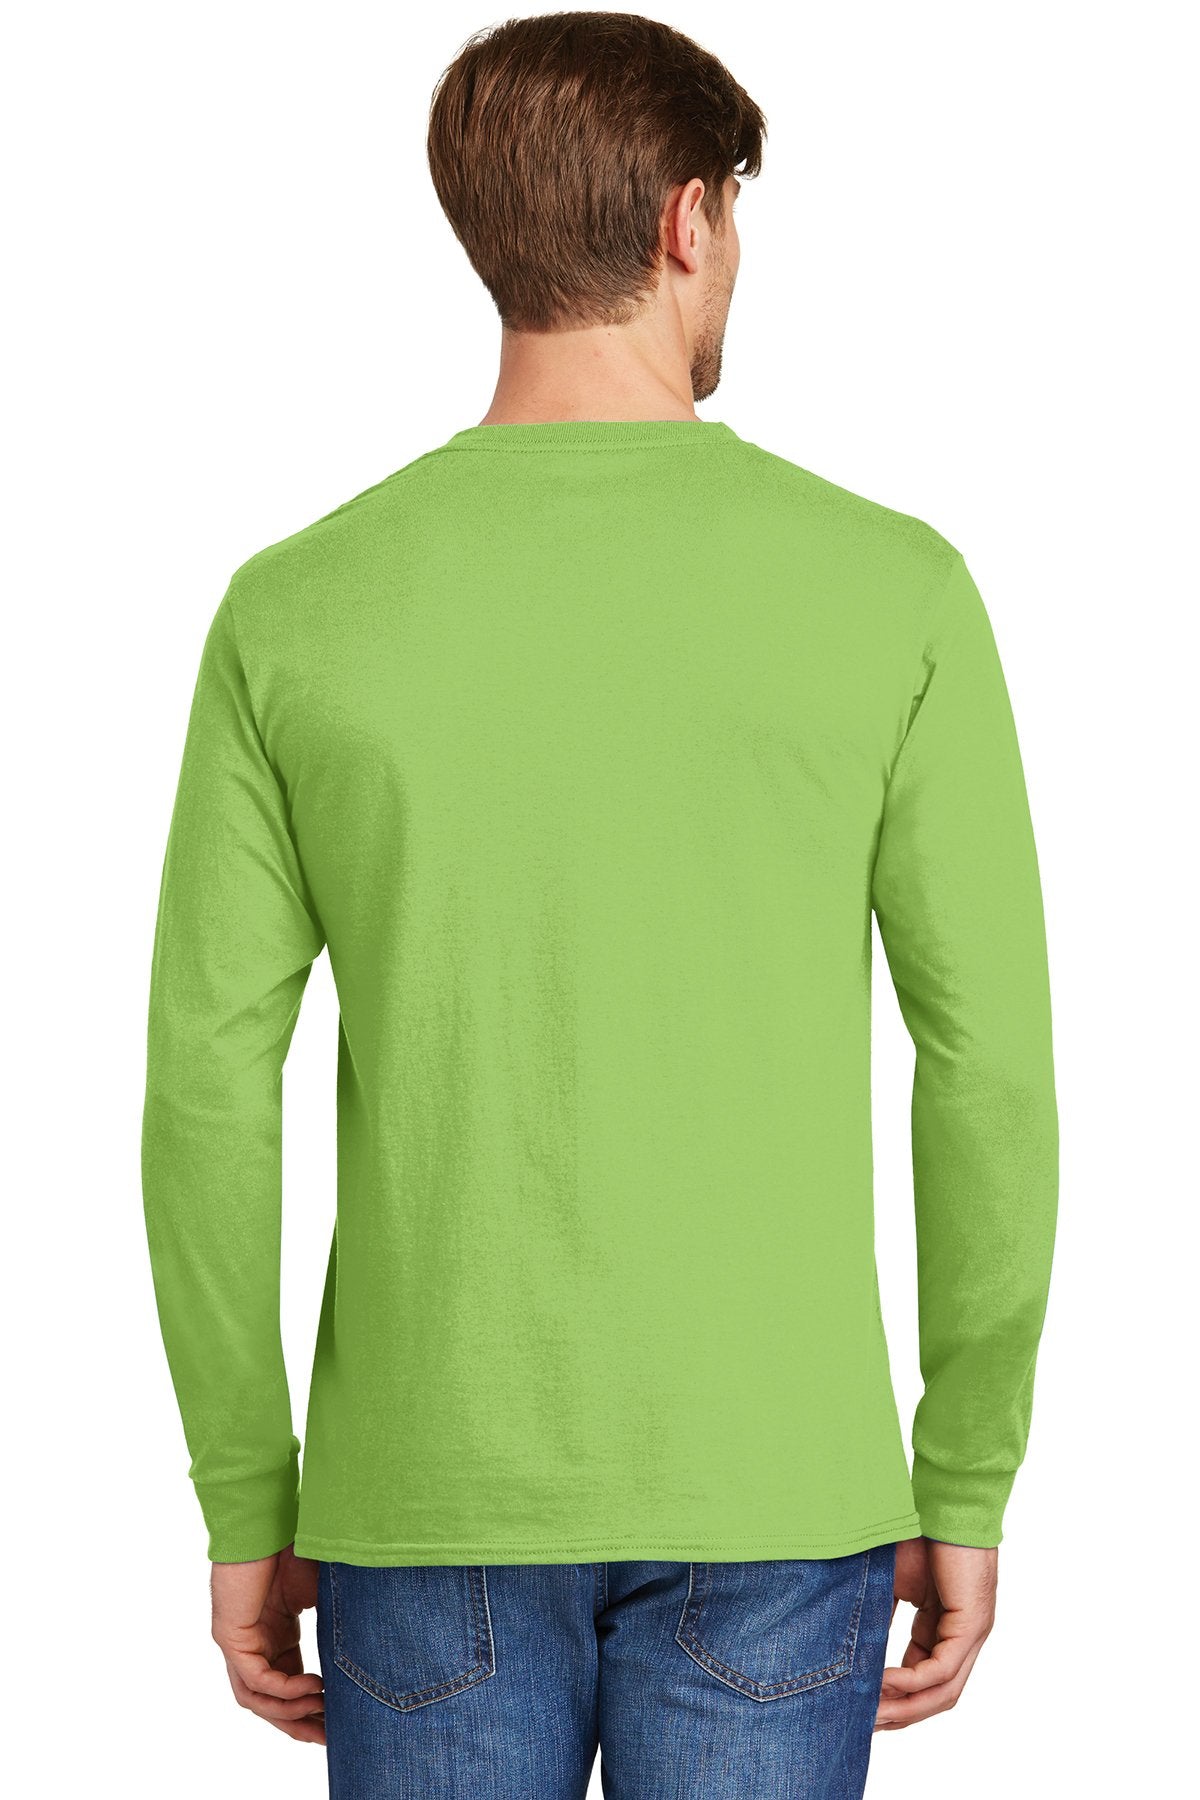 hanes tagless cotton long sleeve t shirt 5586 lime